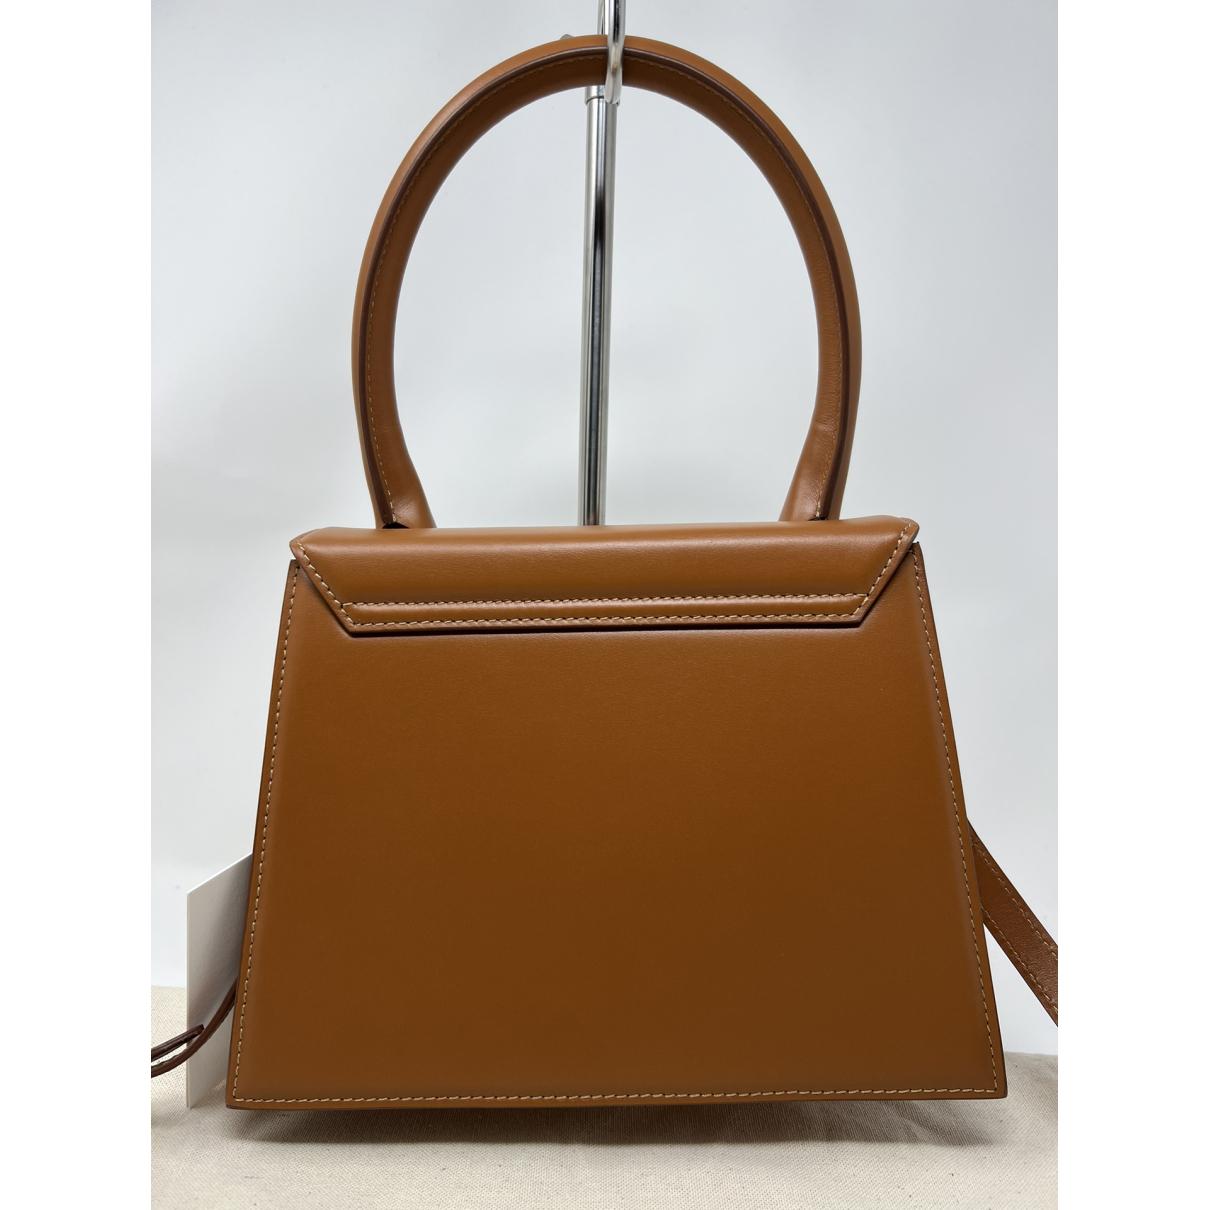 Chiquito leather handbag - 4